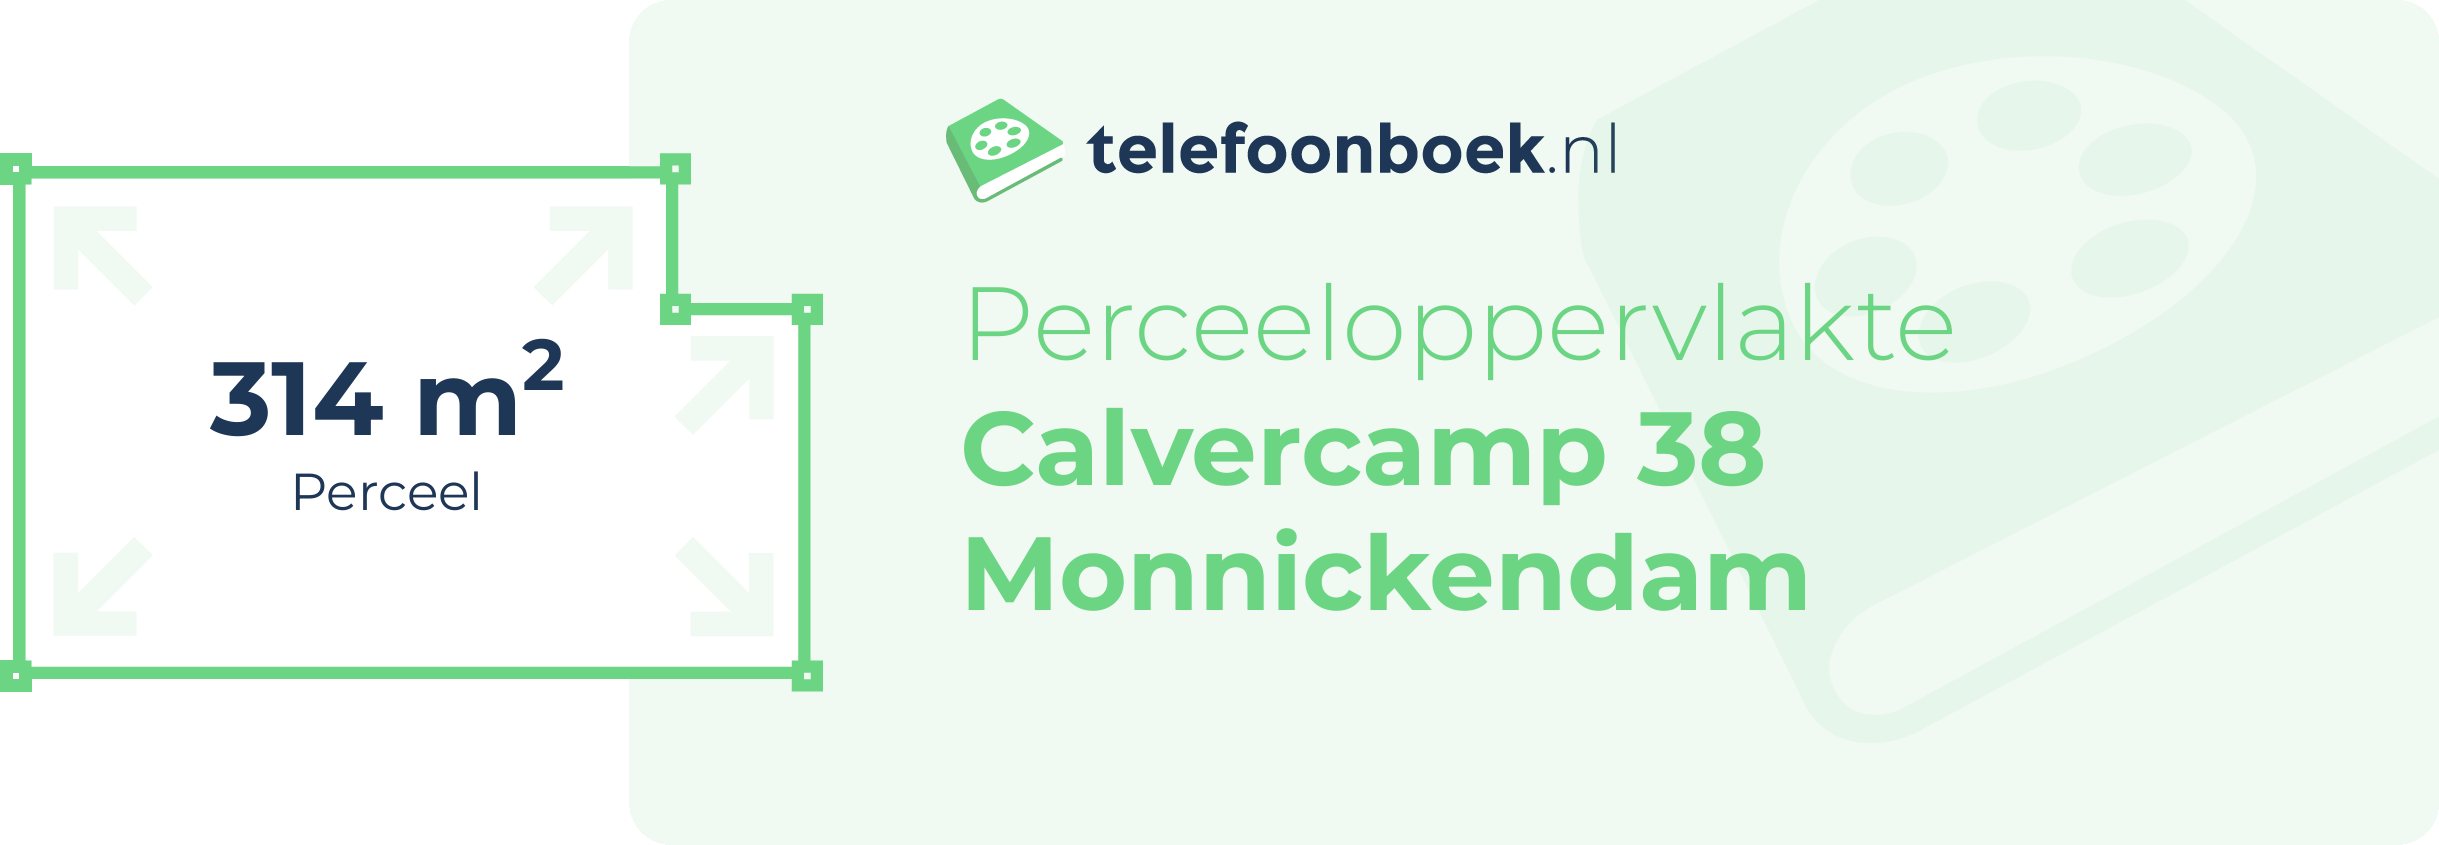 Perceeloppervlakte Calvercamp 38 Monnickendam